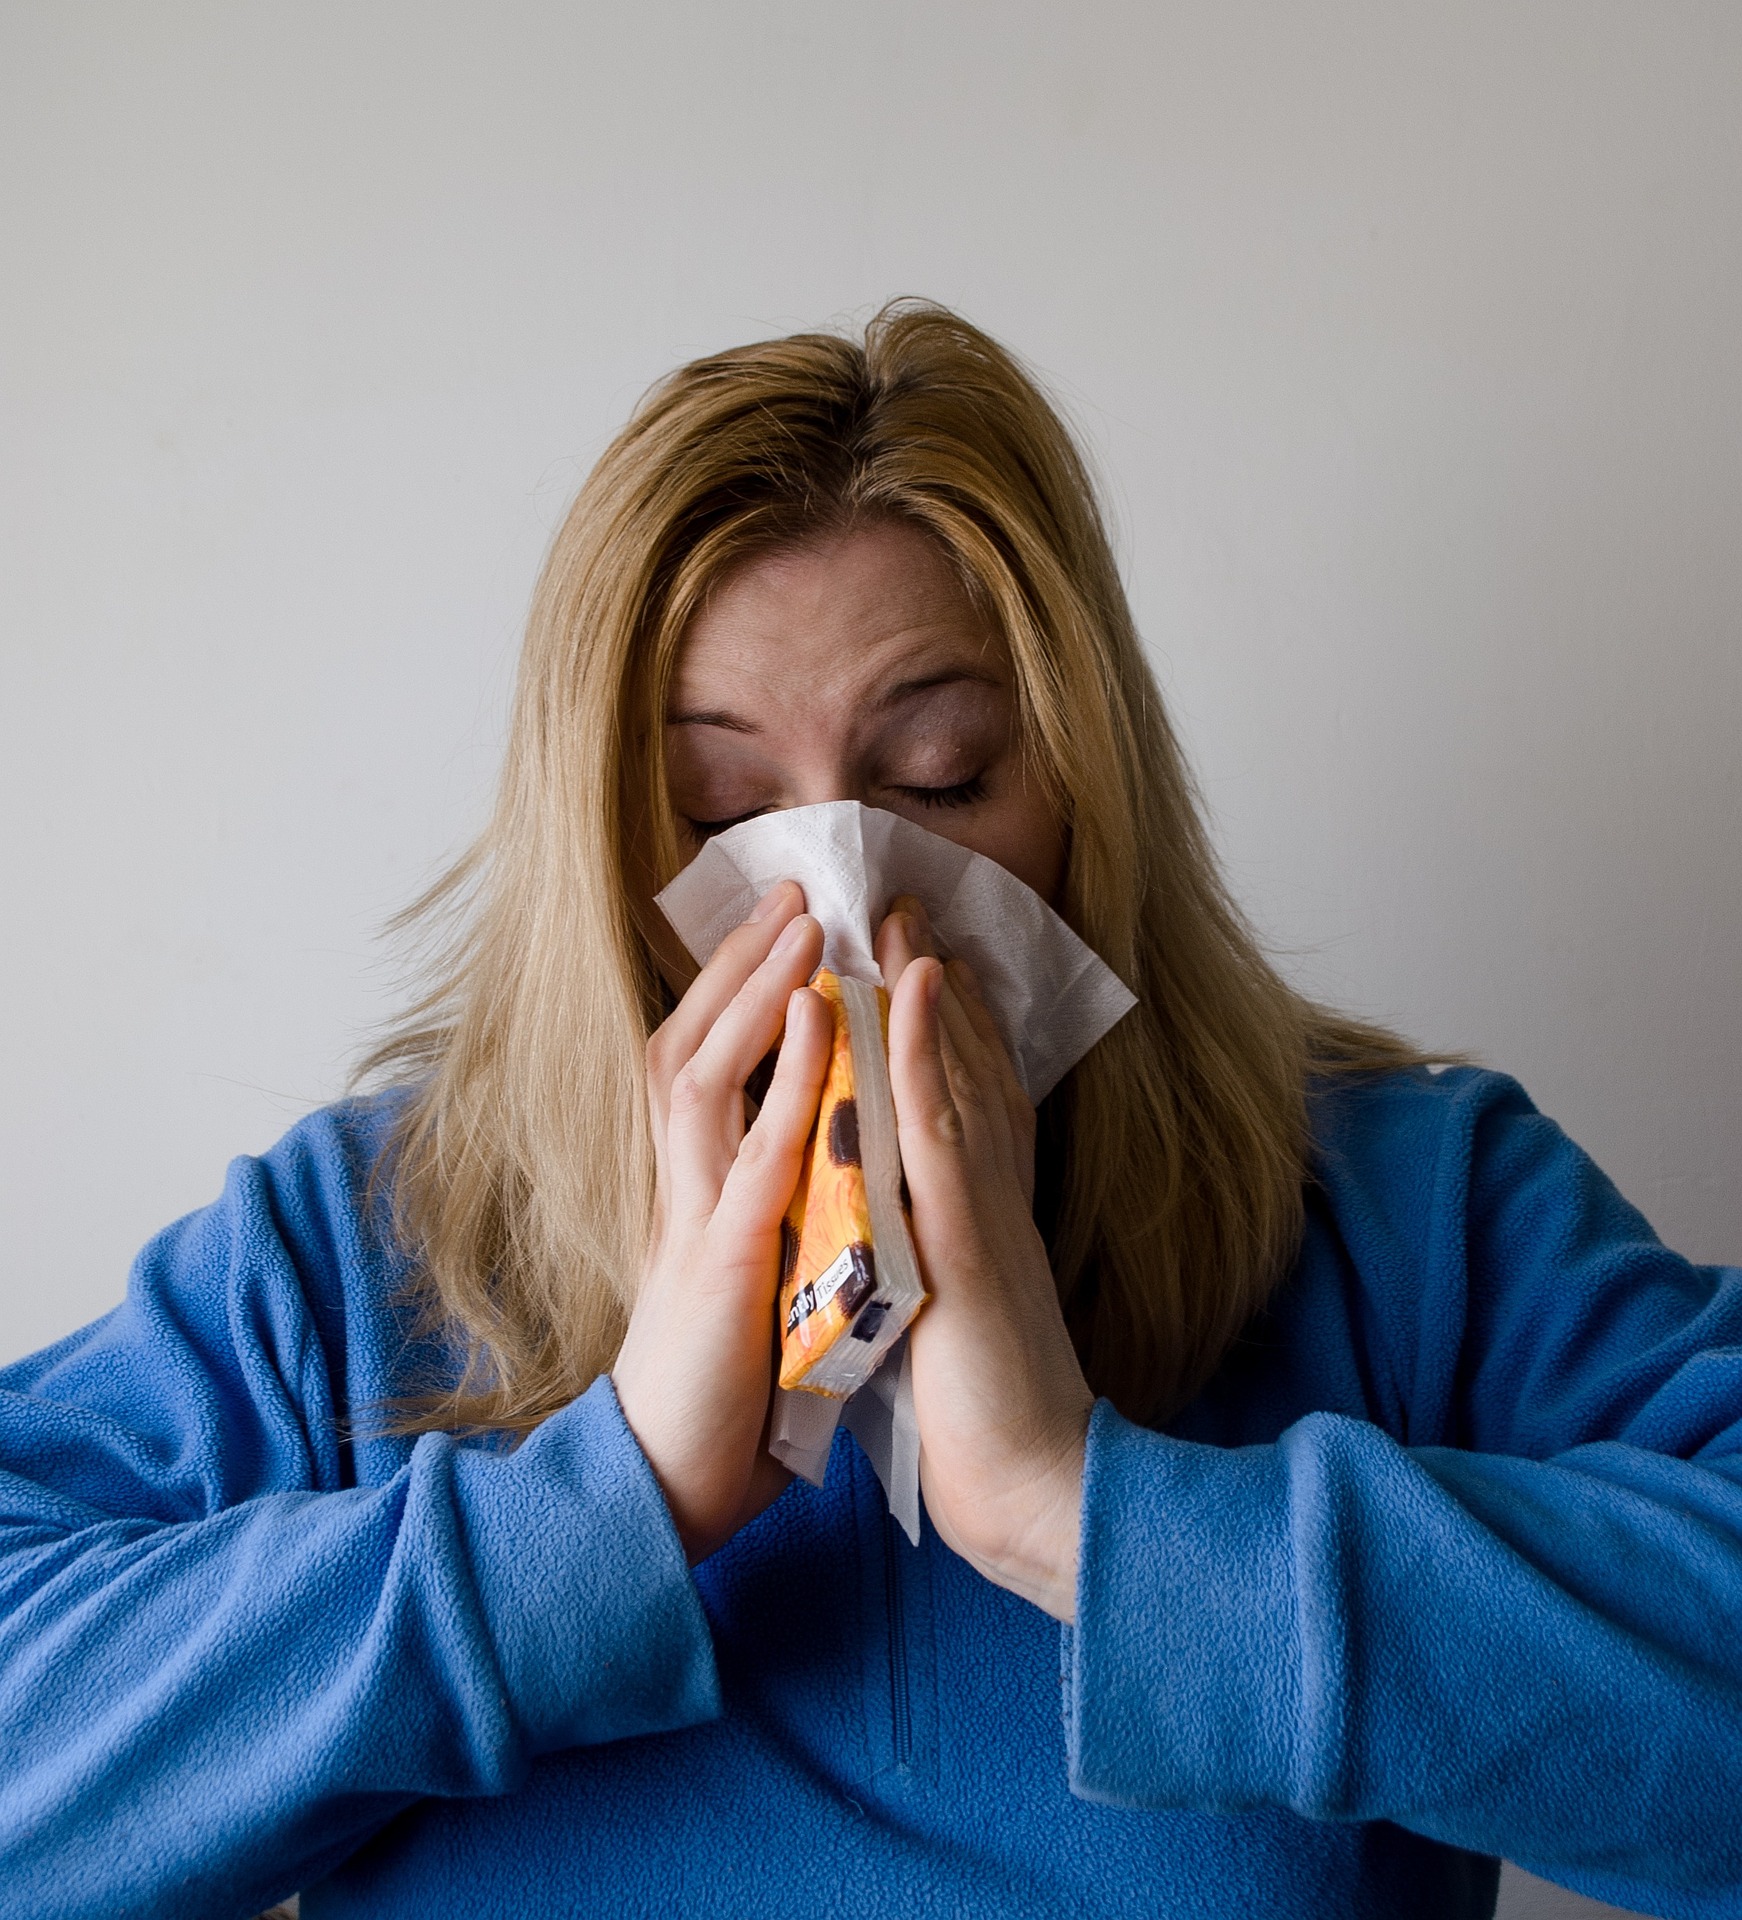 Treat hay fever allergy symptoms naturally